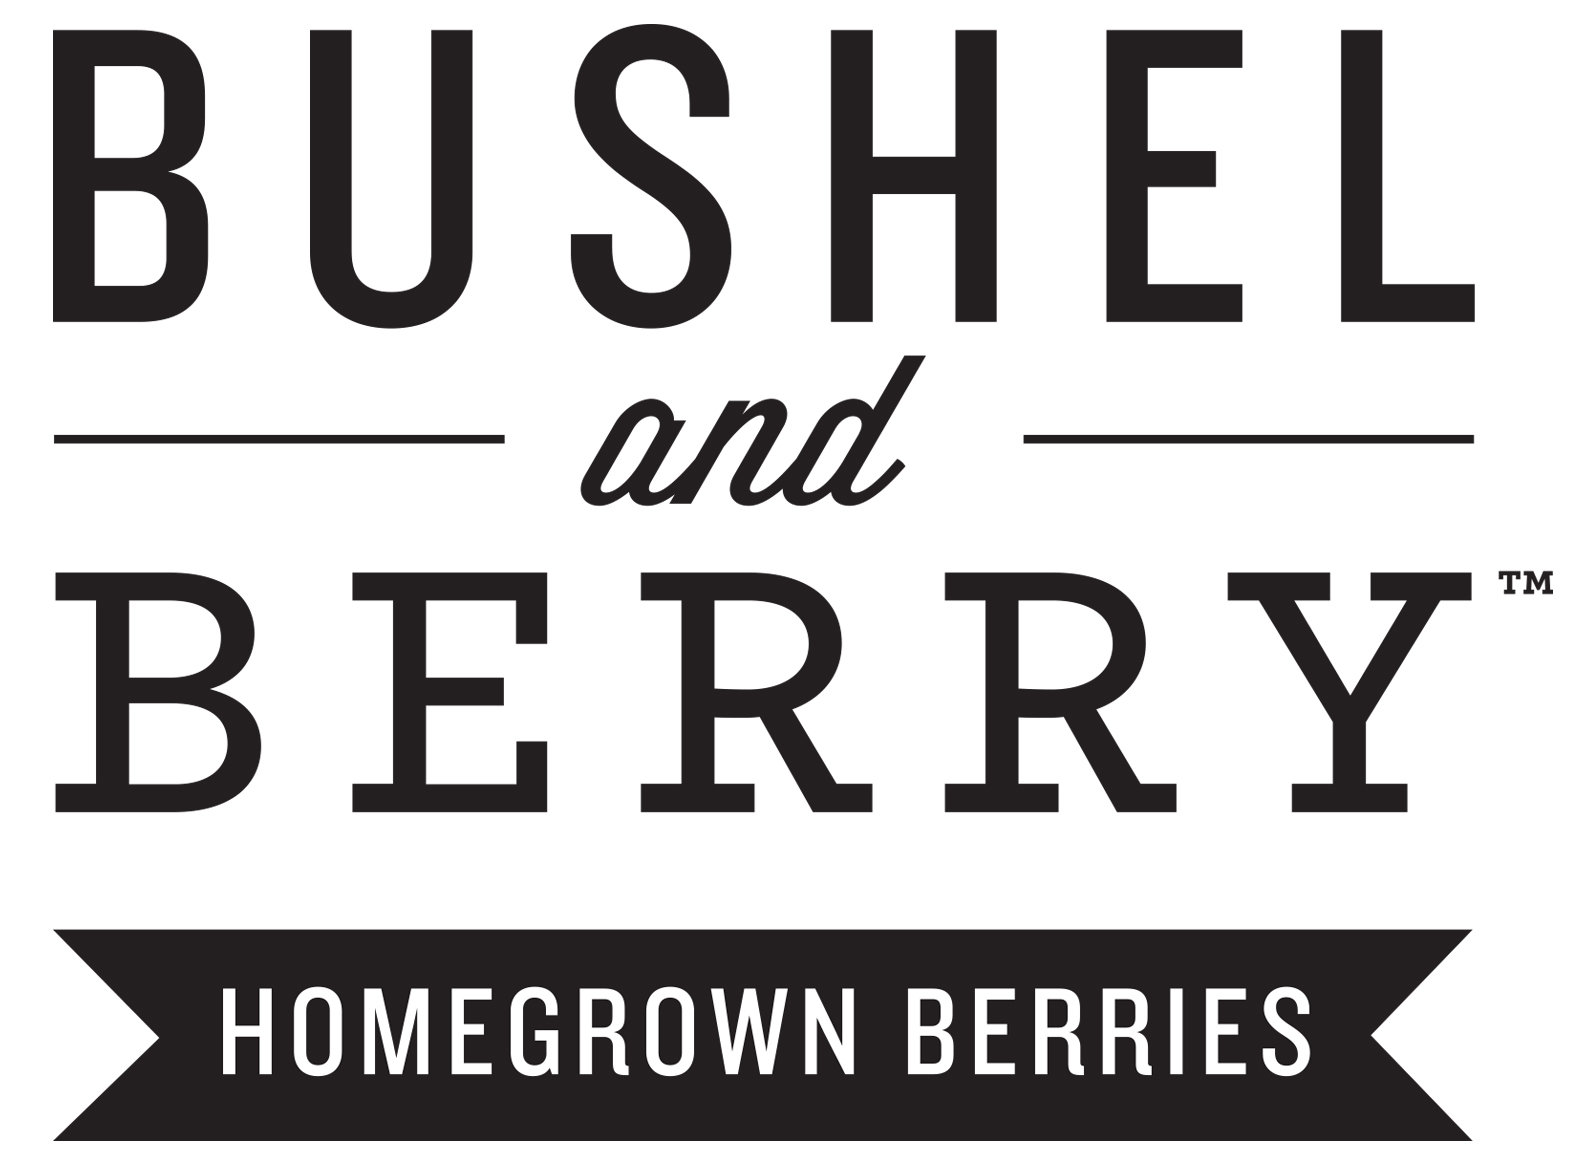 Bushel & Berry